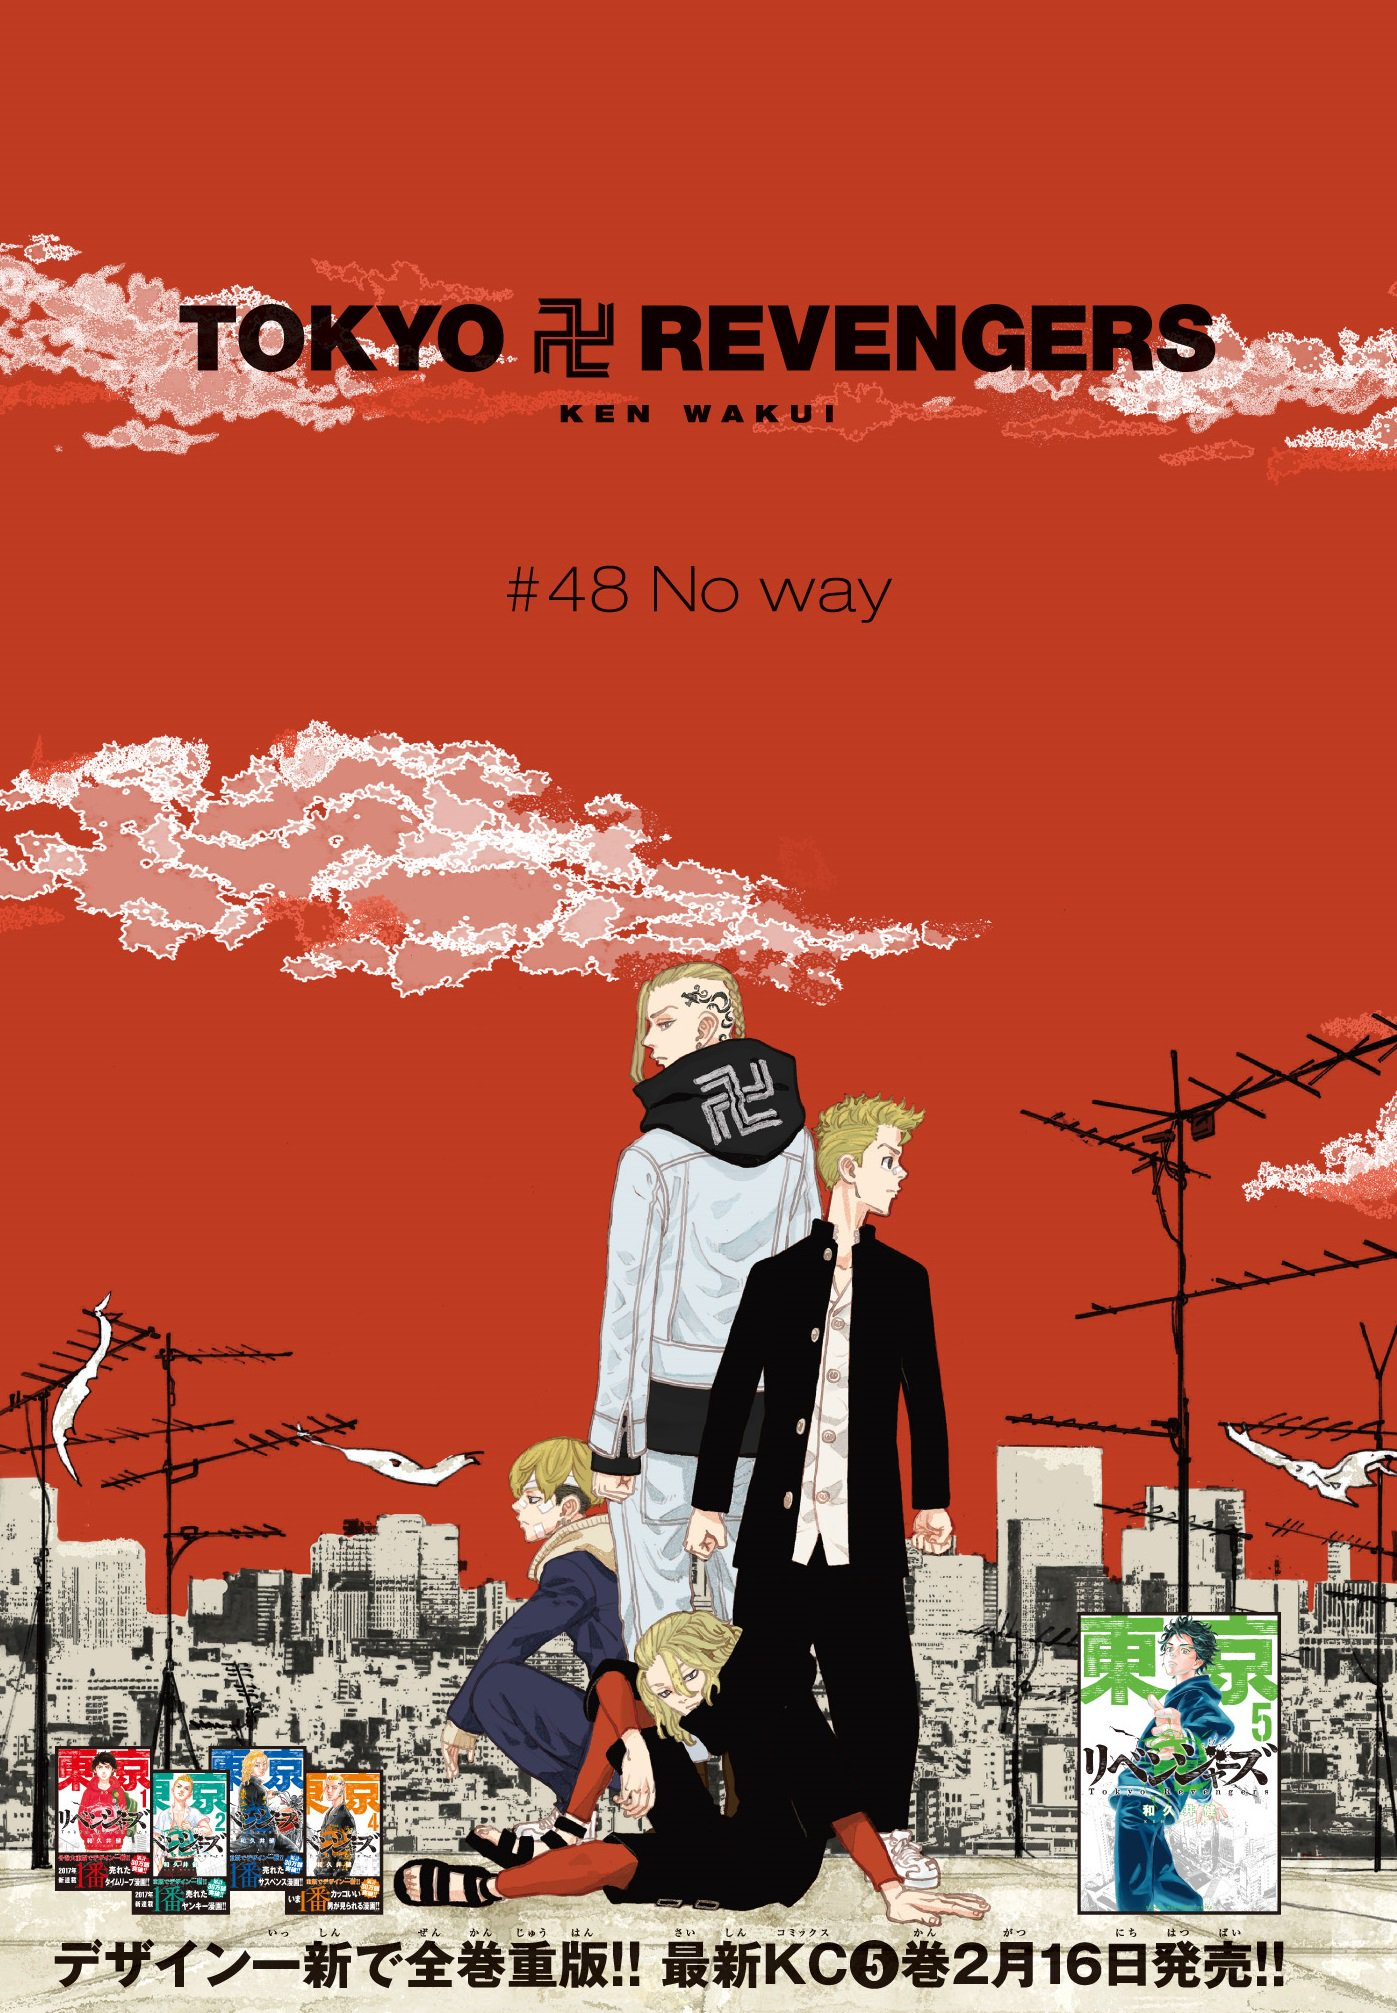 Manjiro Sano, Tokyo Revengers Wiki, Fandom